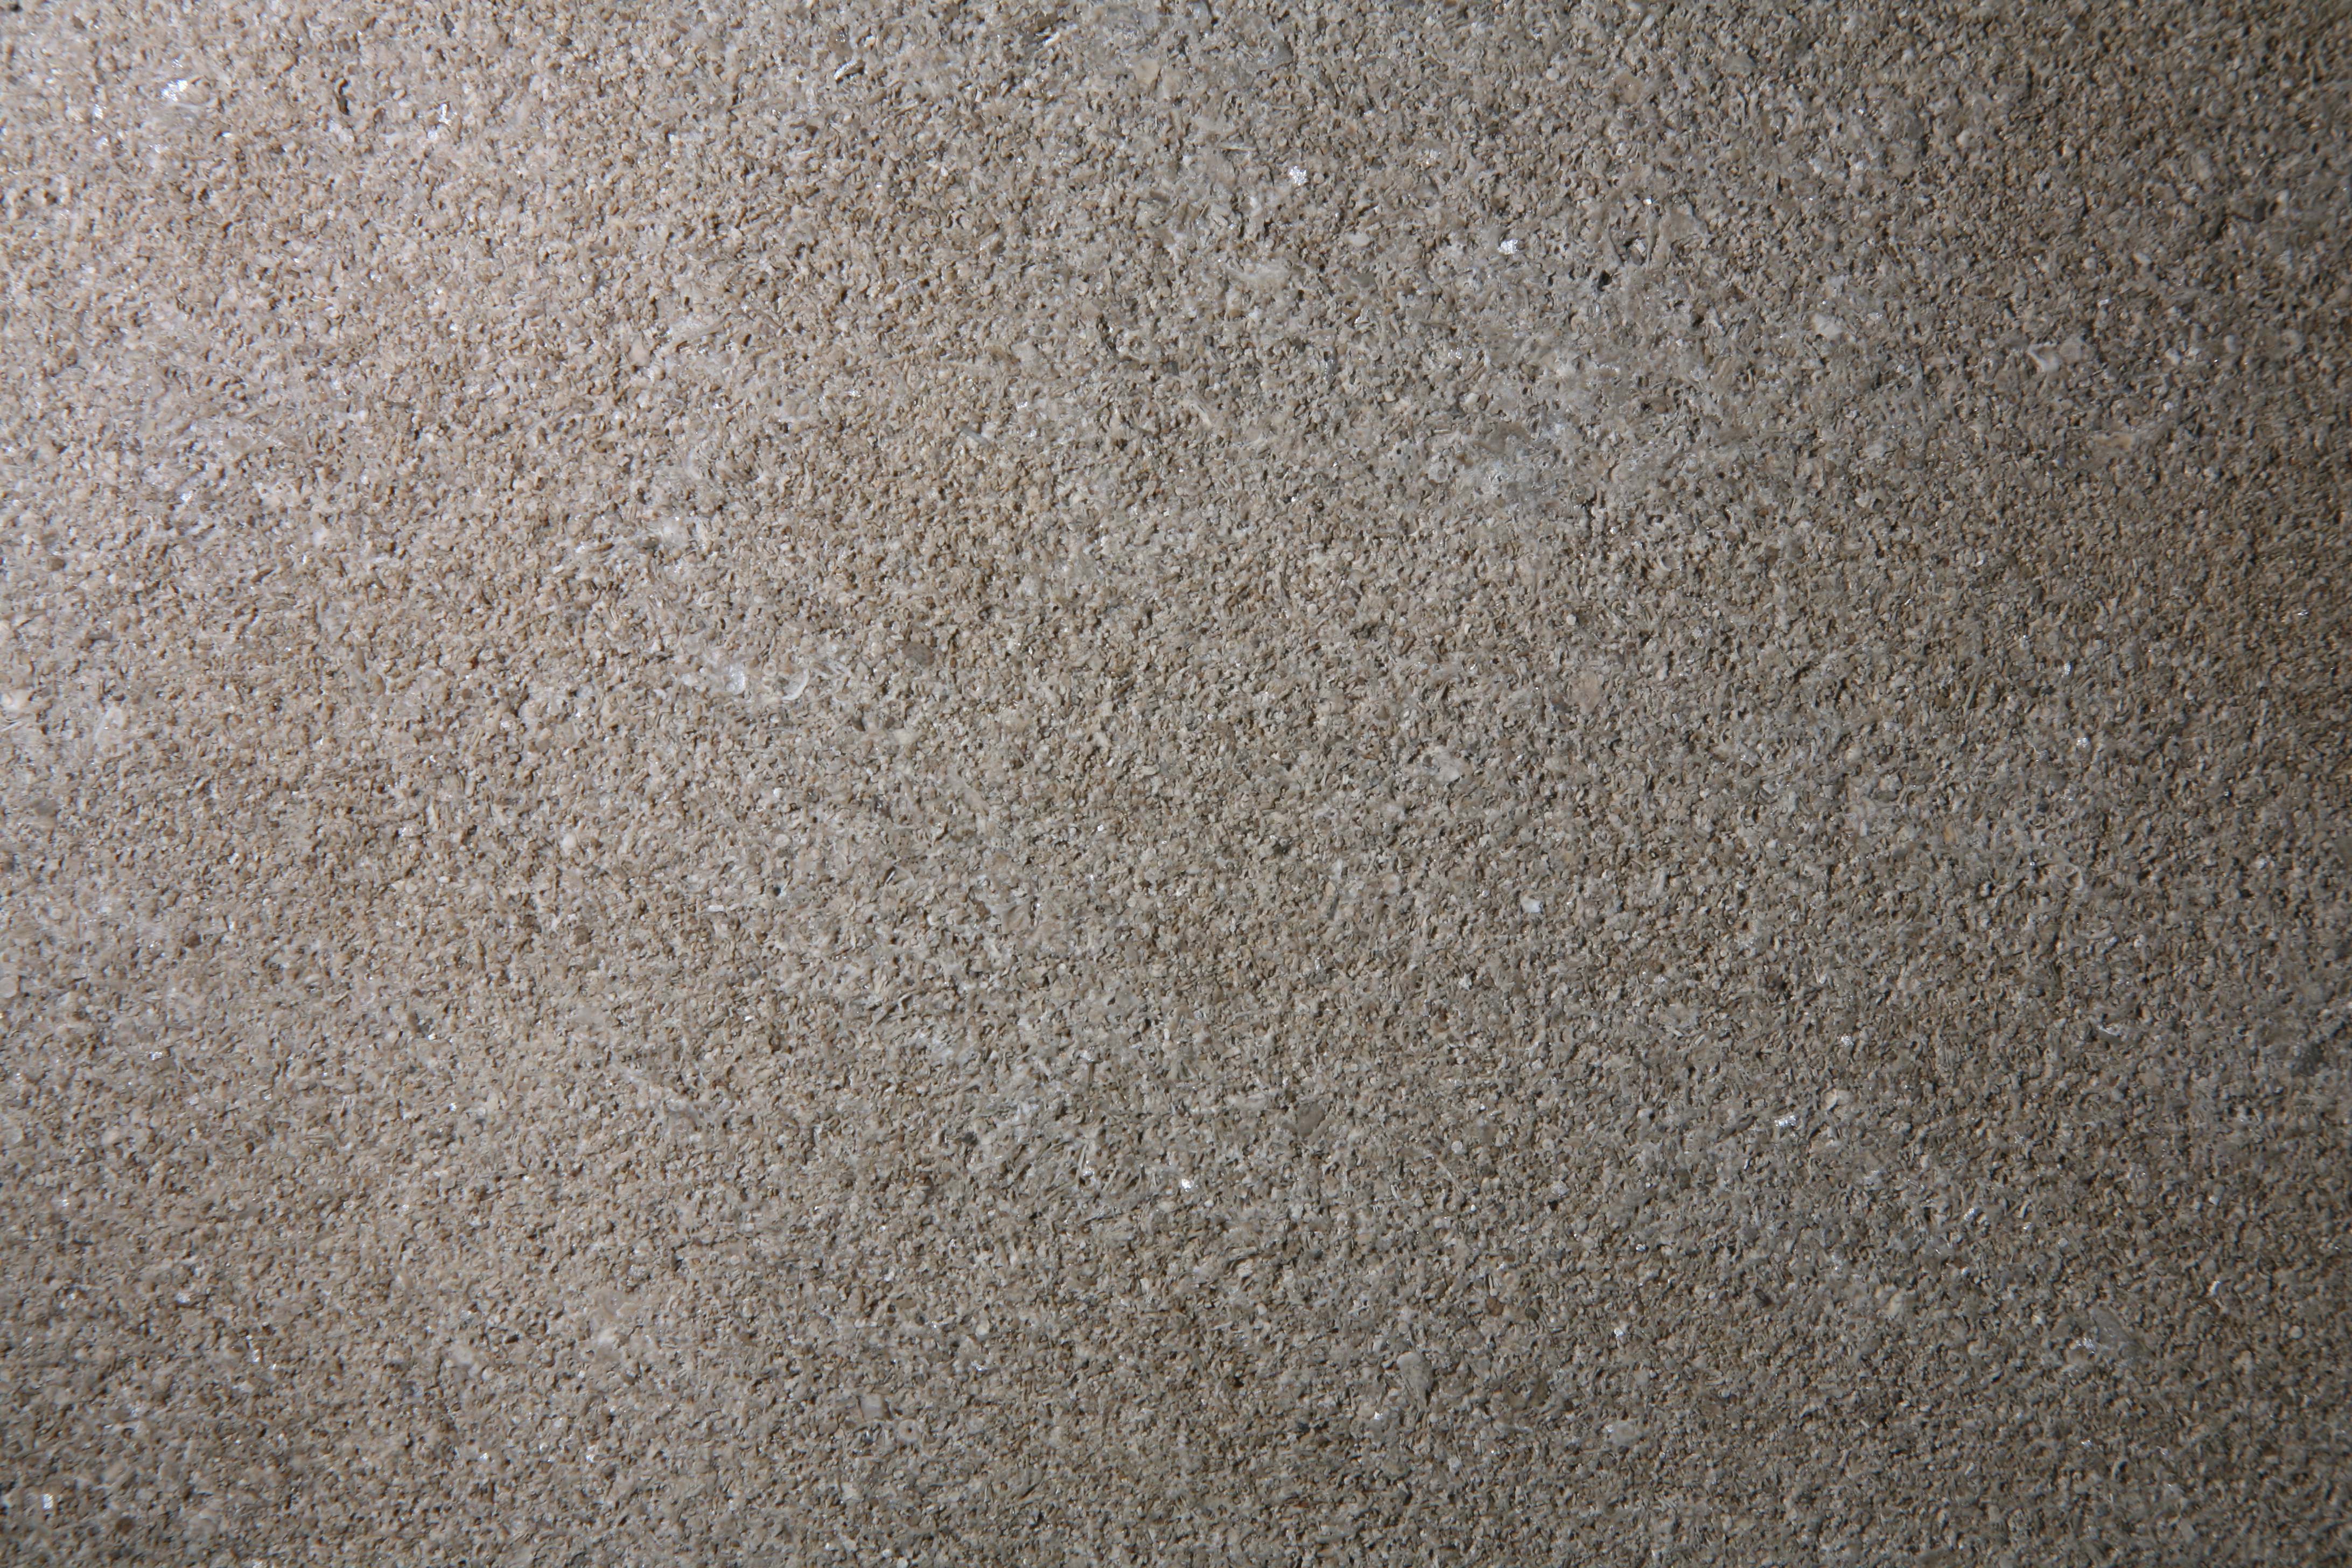 File:Concrete texture.jpg - Wikimedia Commons